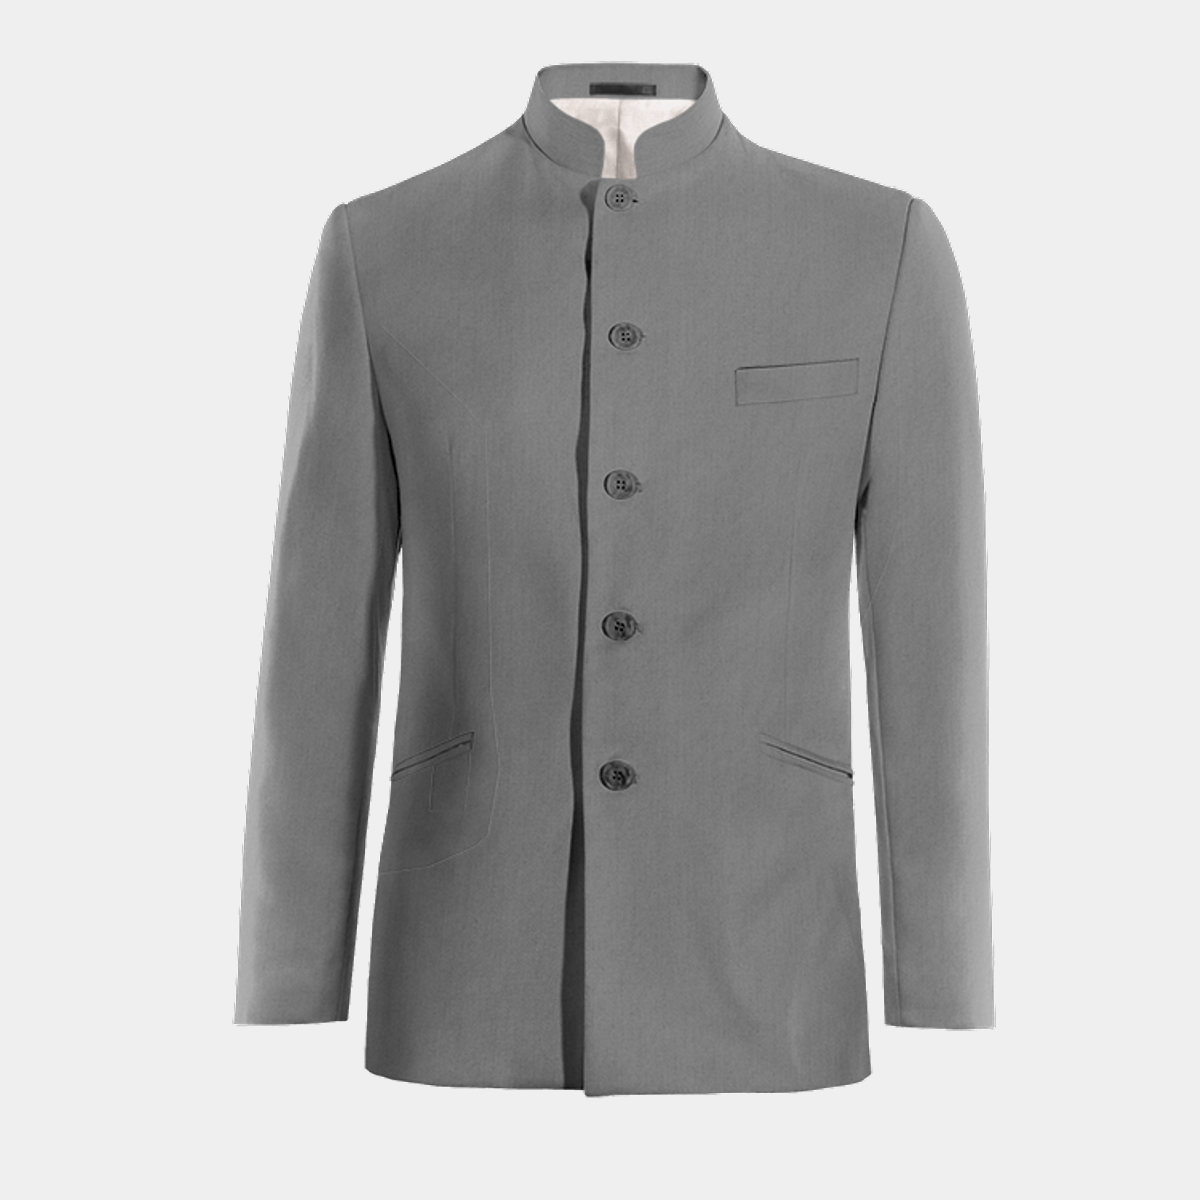 Light Gray Wool Blends mandarin collar Suit Jacket £119 | Hockerty